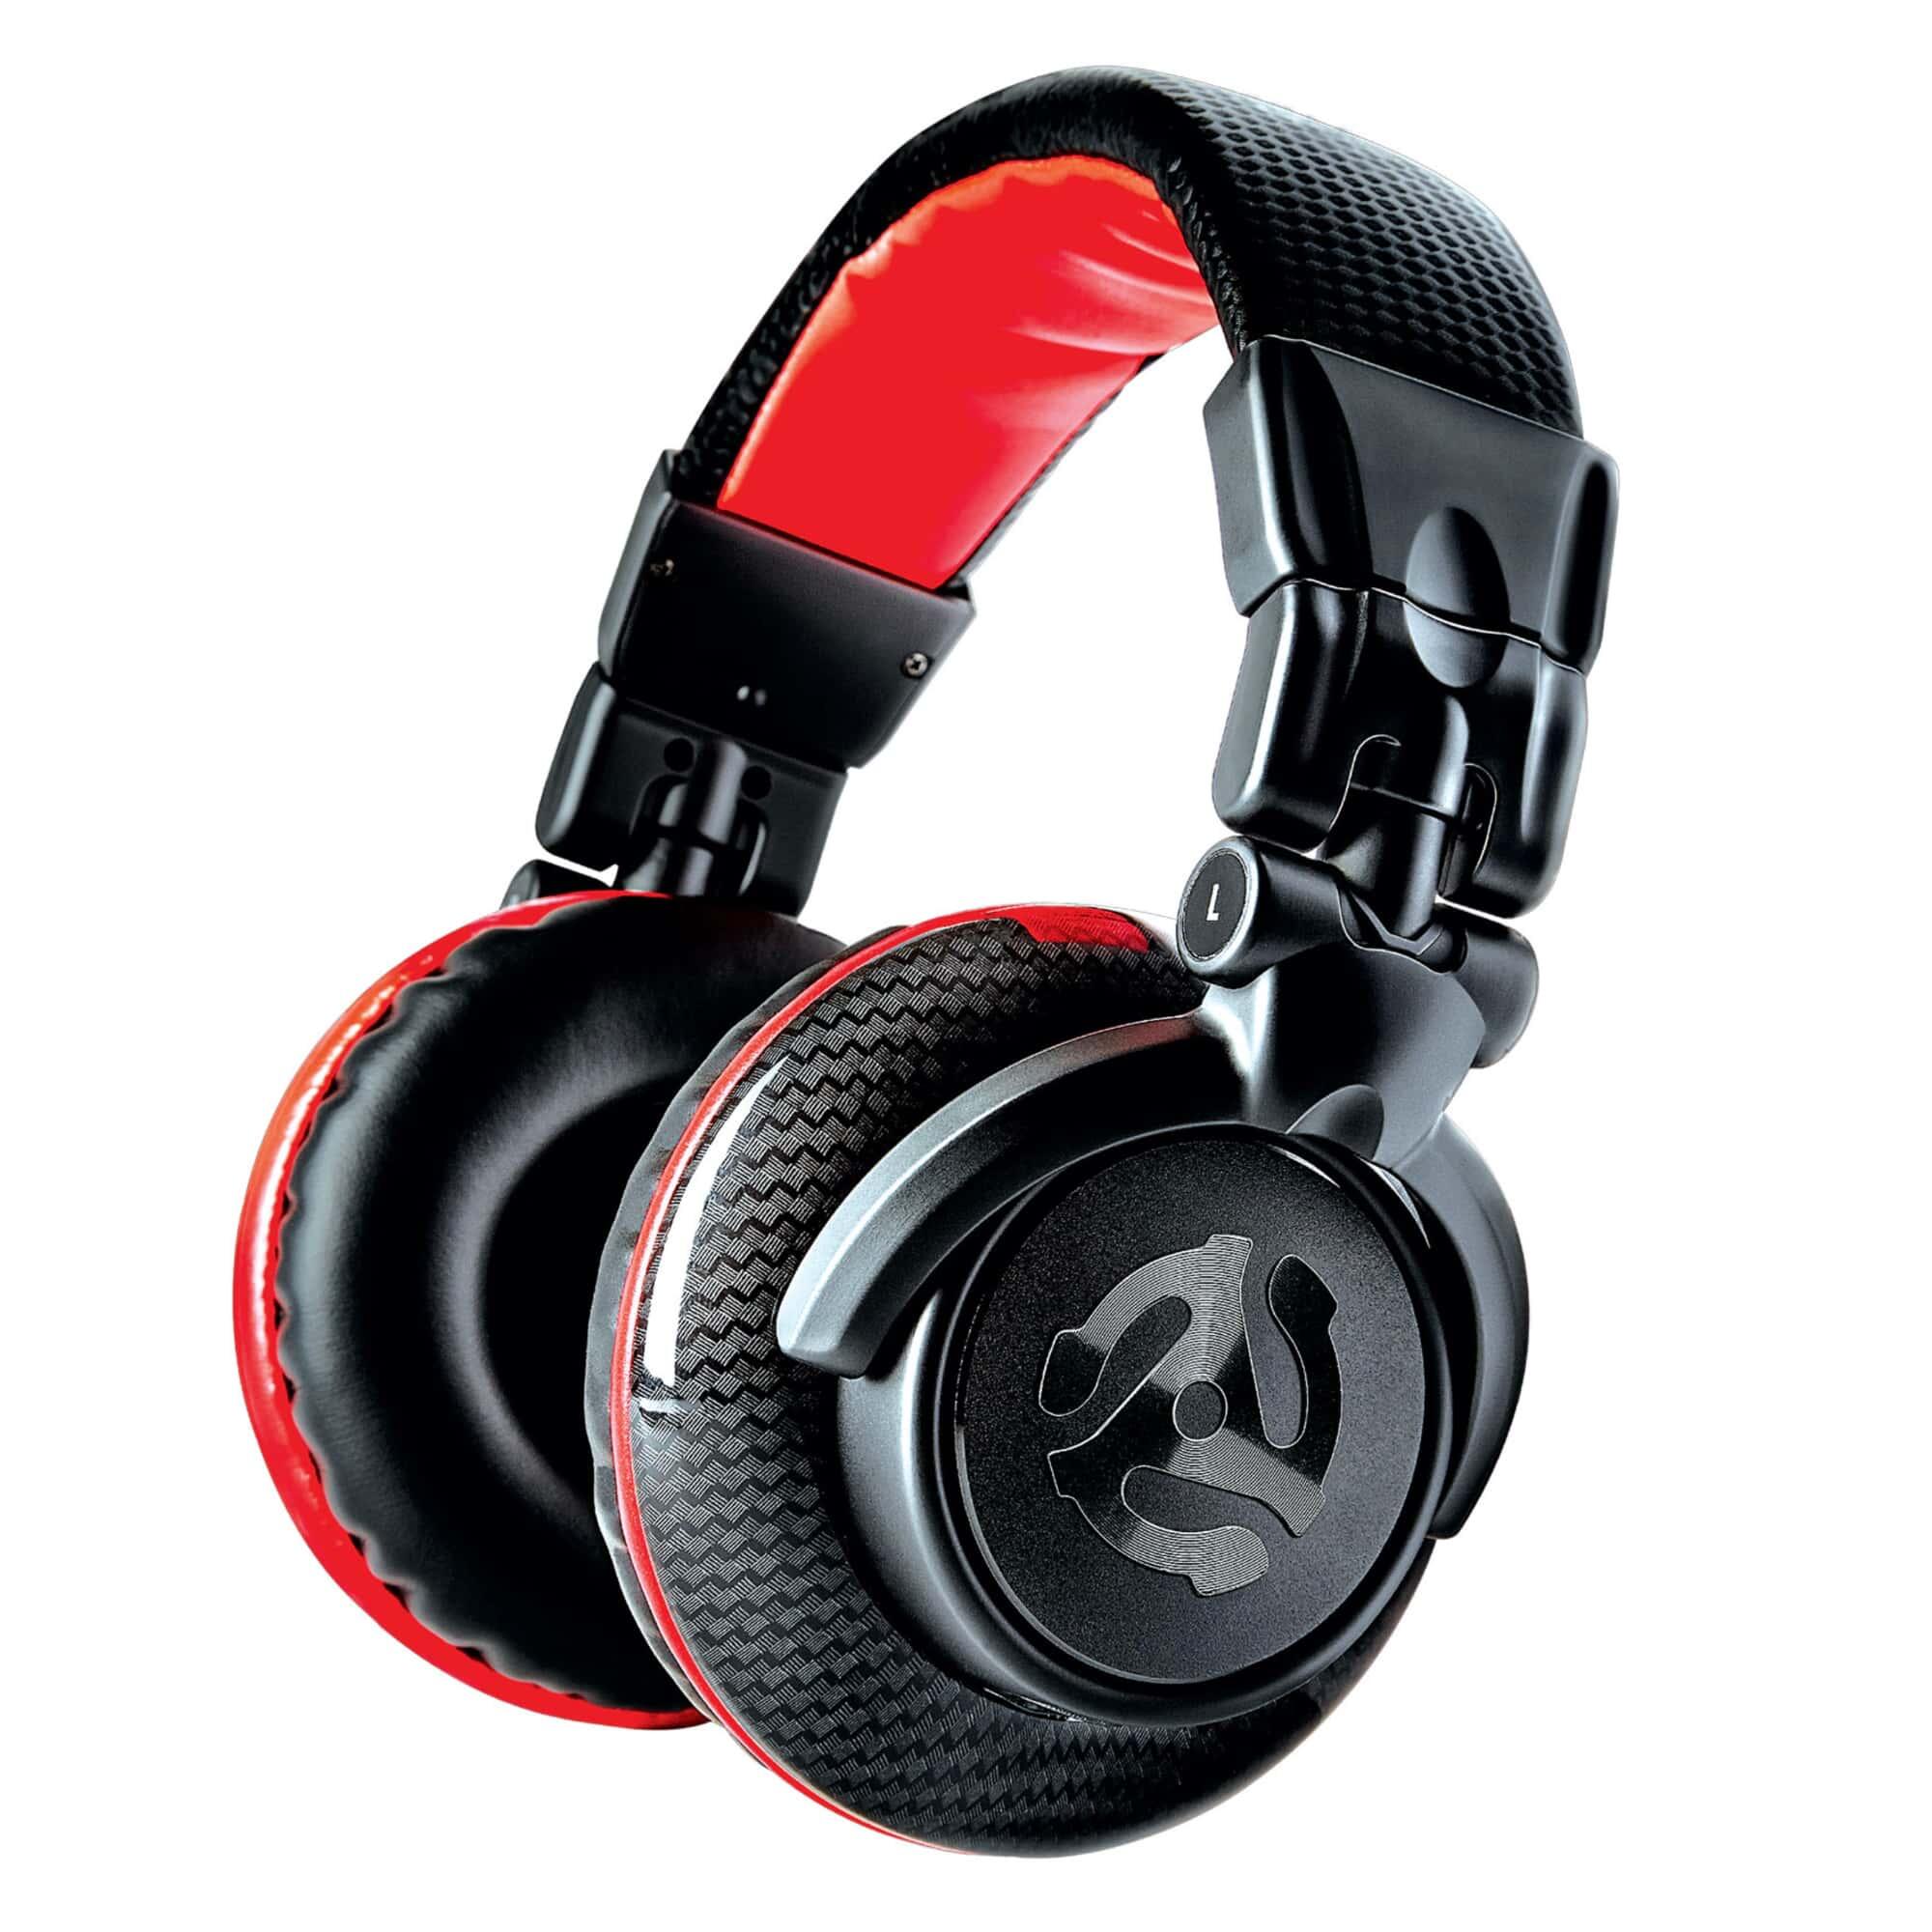 Numark Red Wave Carbon headphones